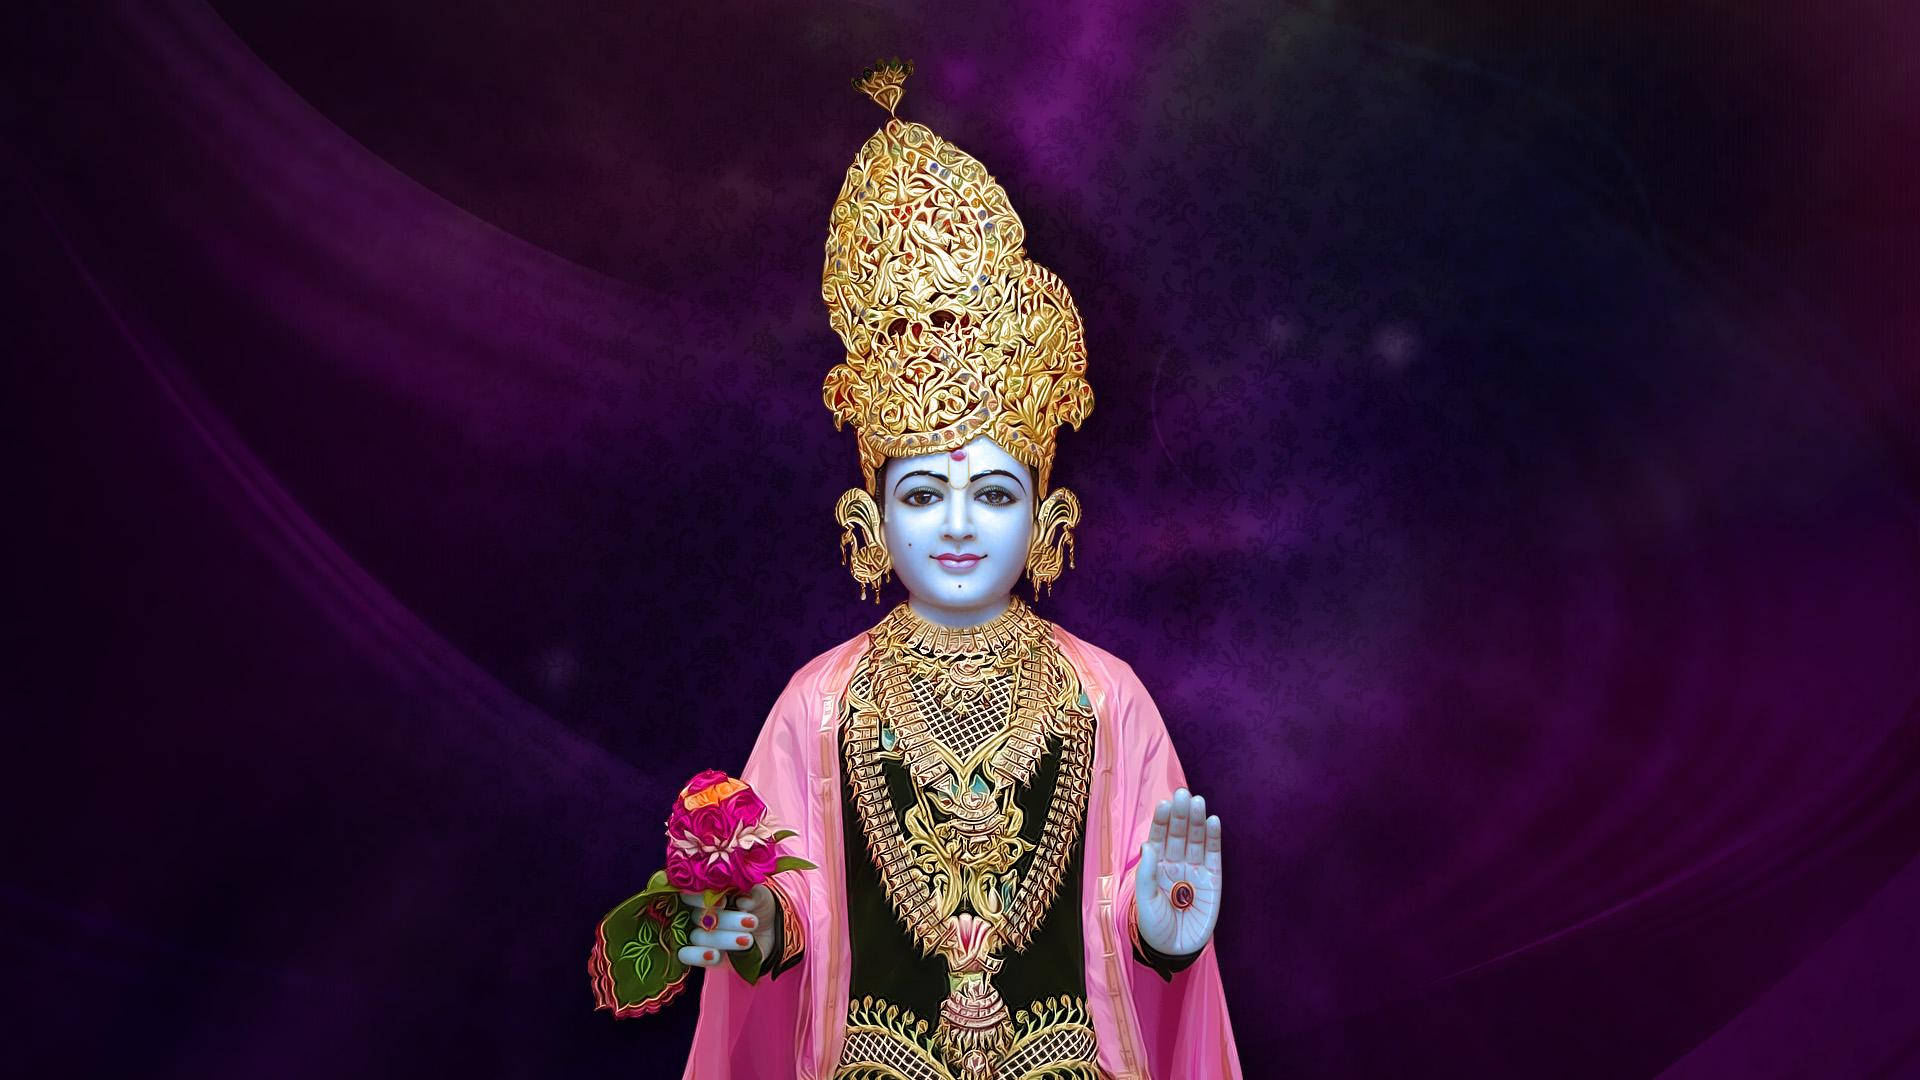 Swaminarayan Covered In Jewelry